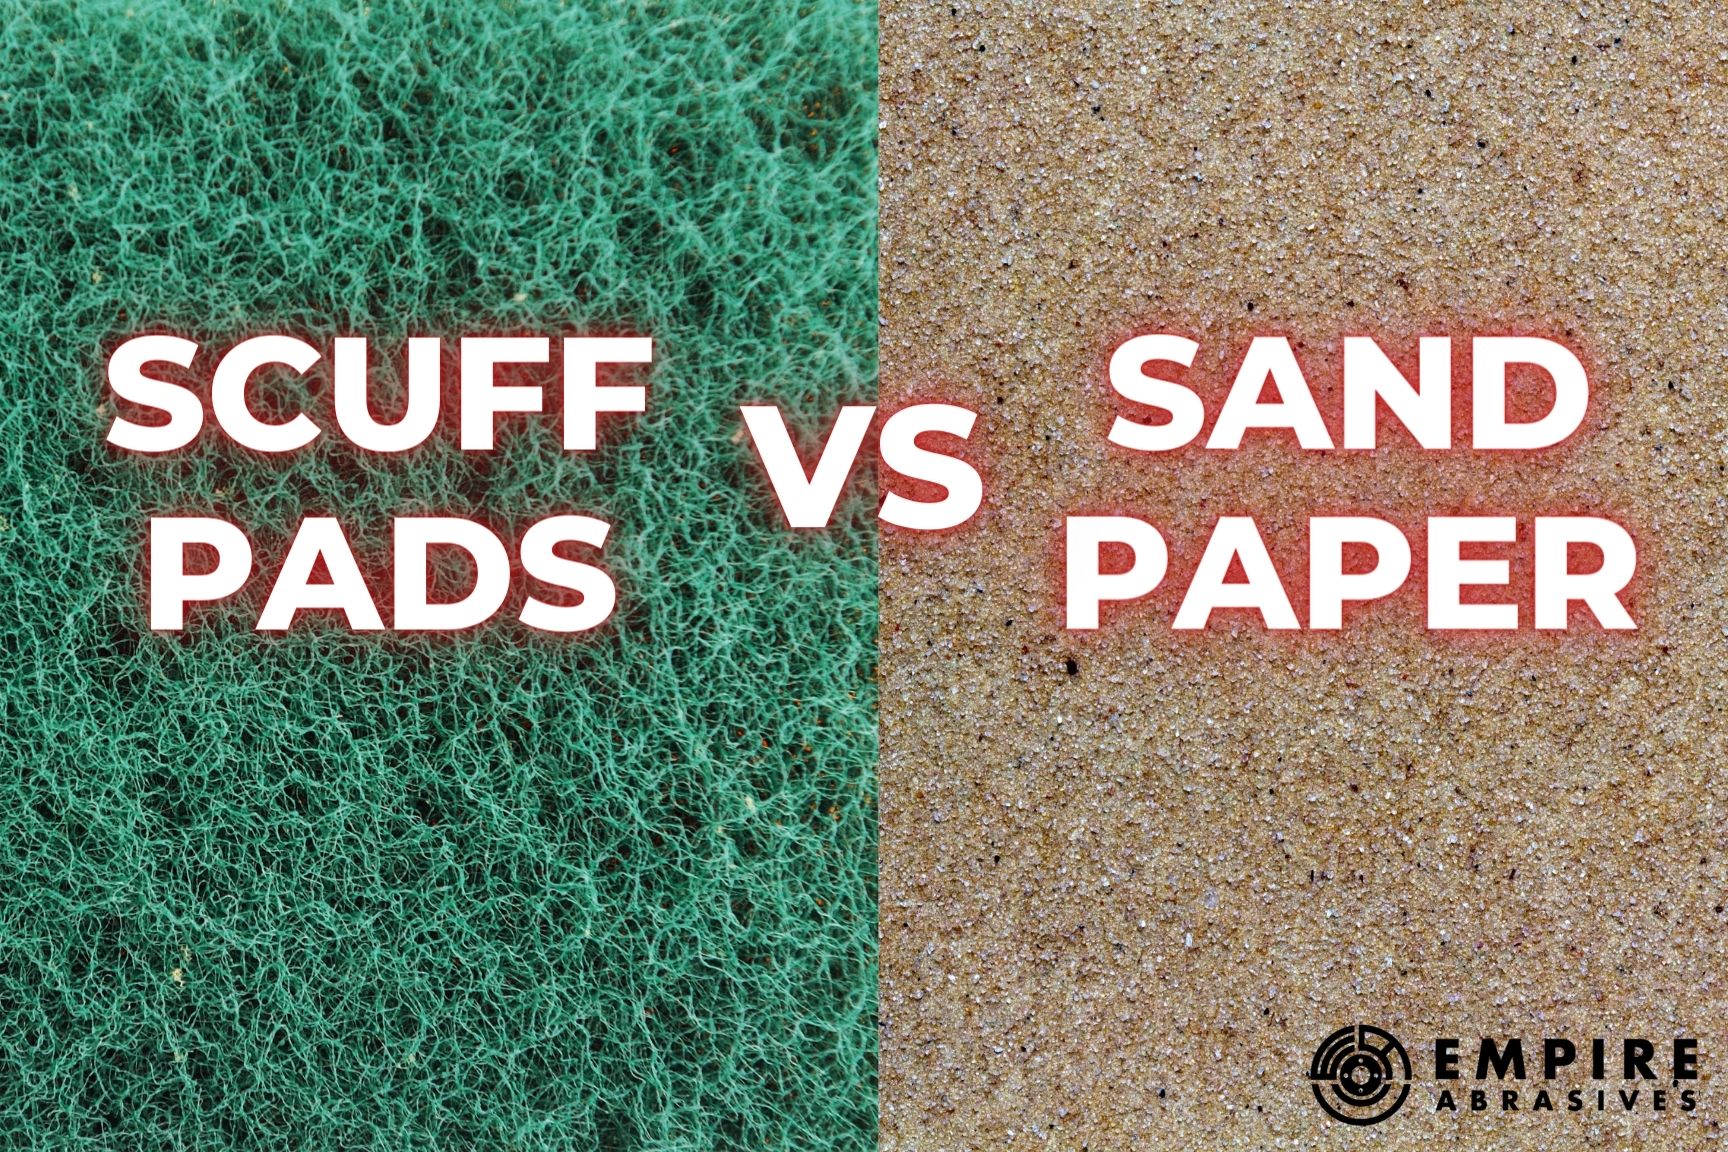 Scuff Pads vs. Sandpaper blog